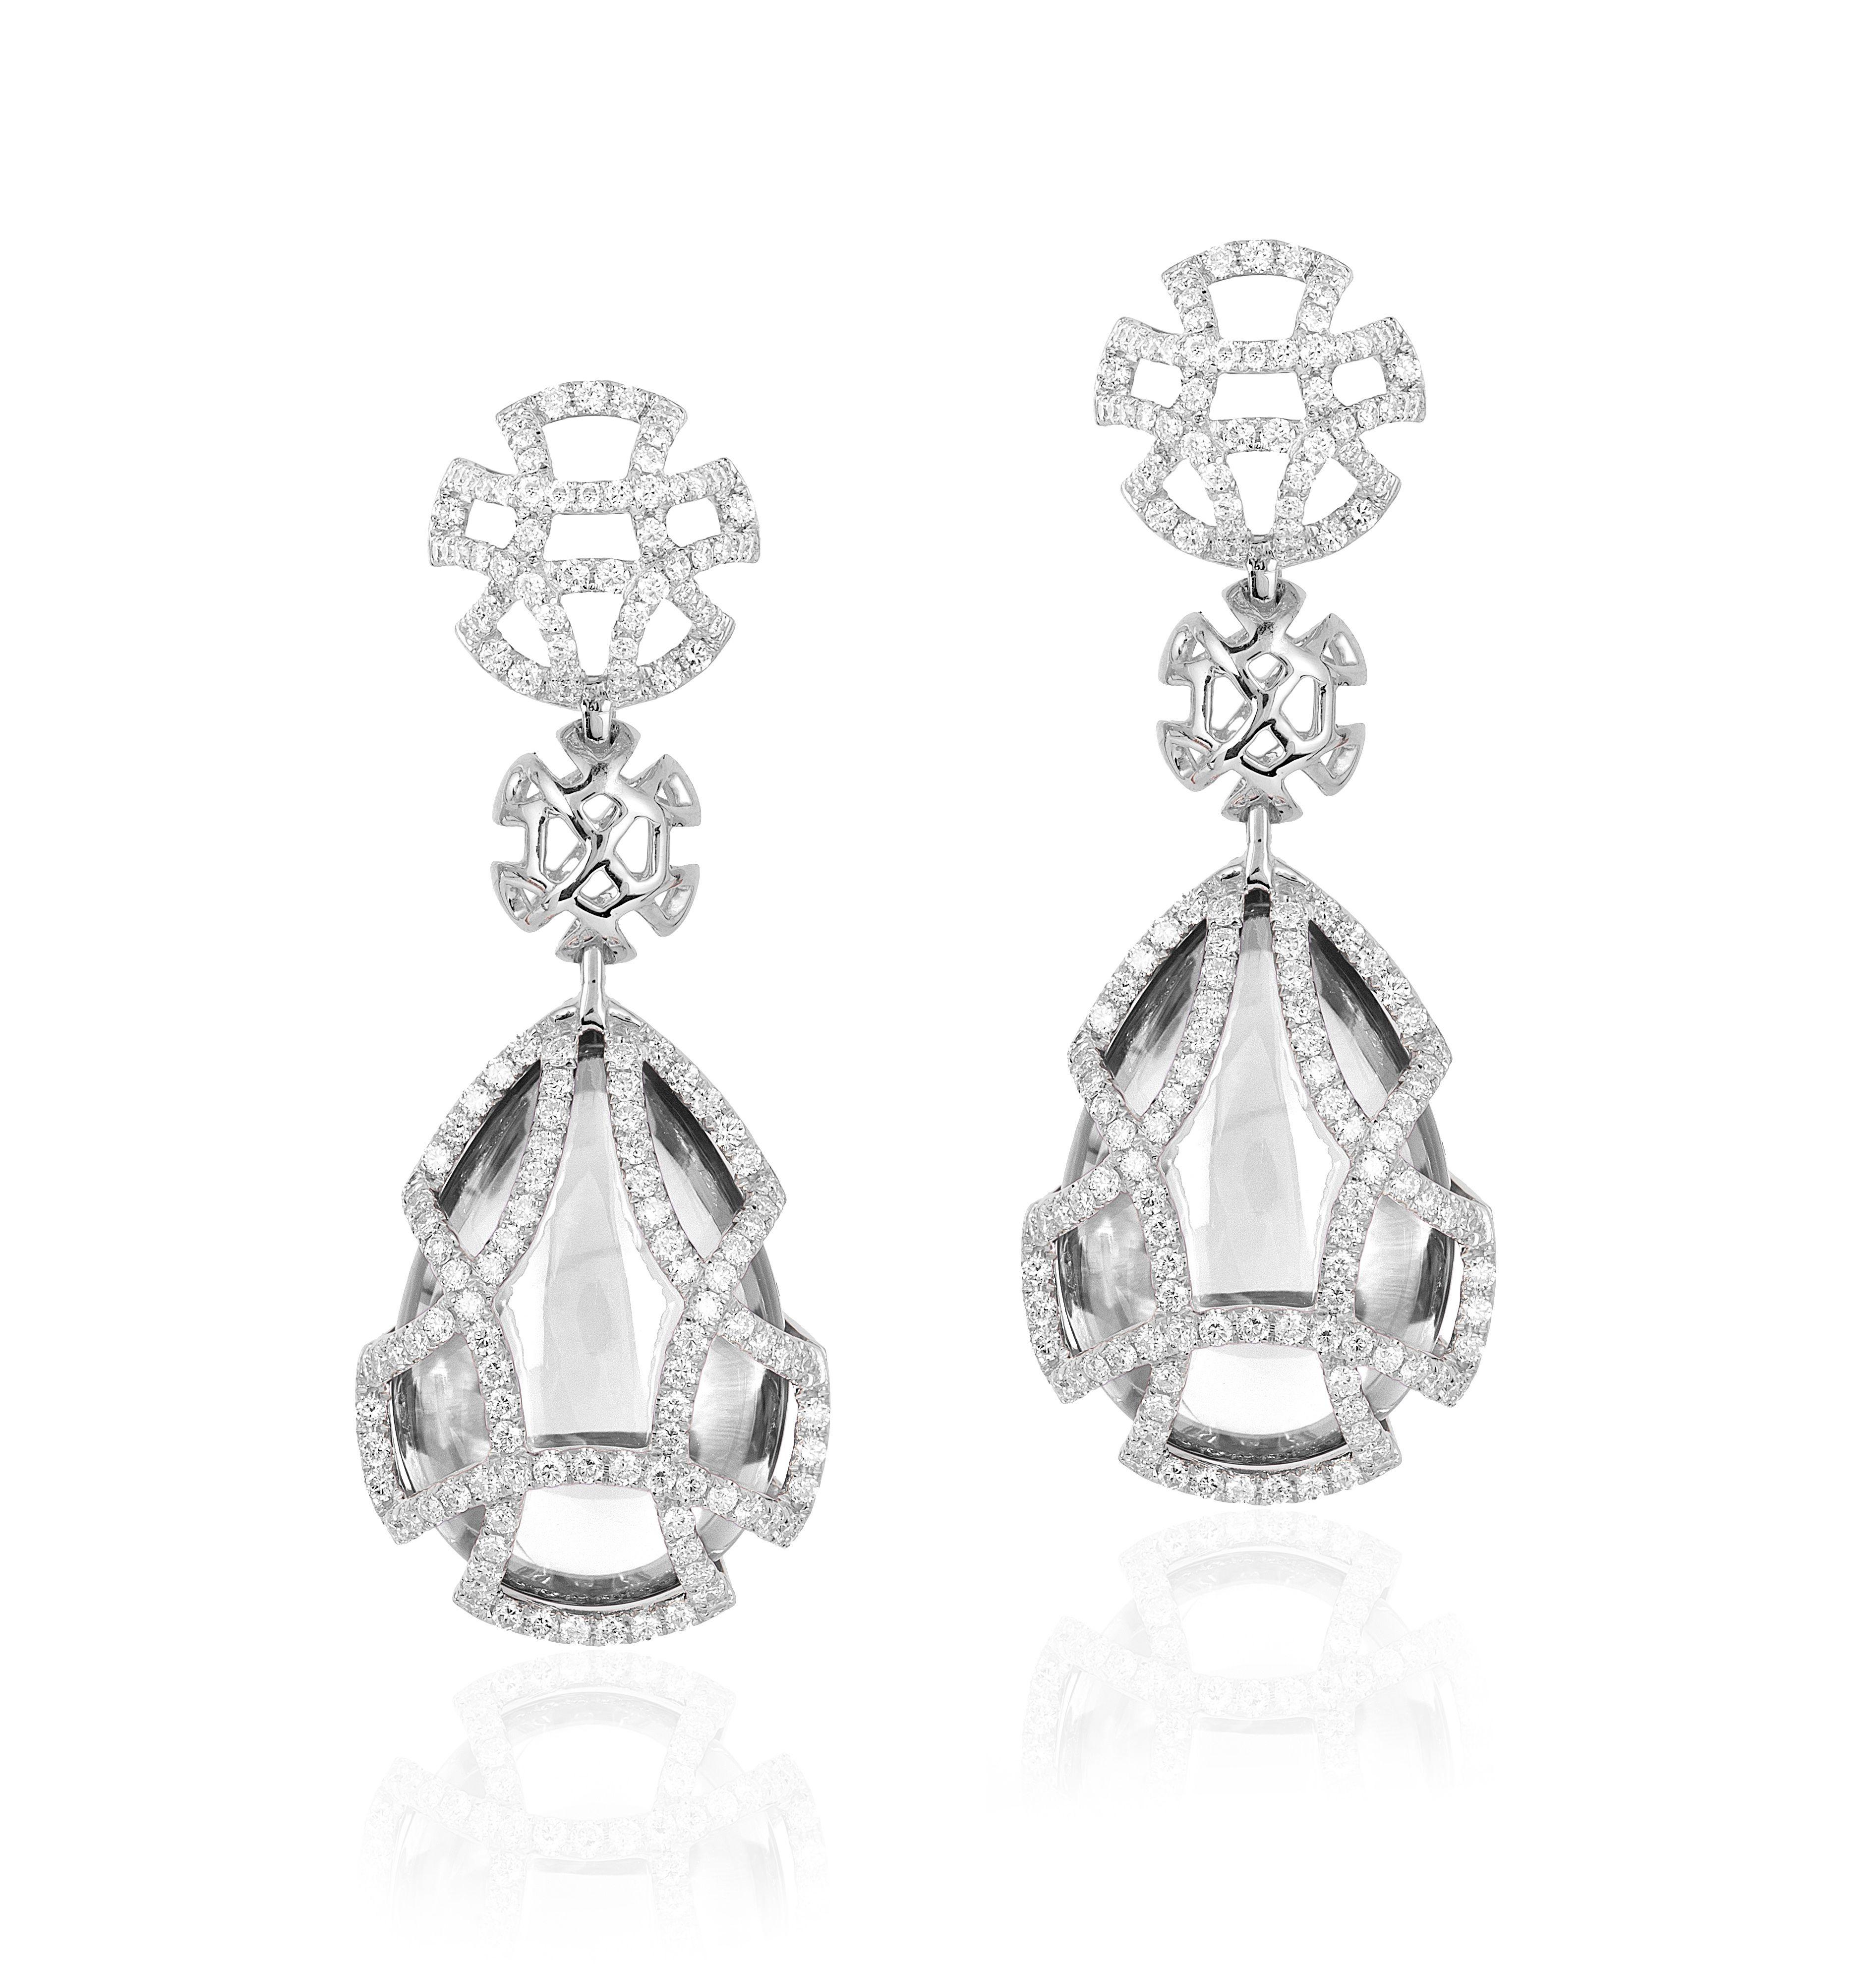 Contemporary Goshwara Rock Crystal Teardrop and Diamond Earrings